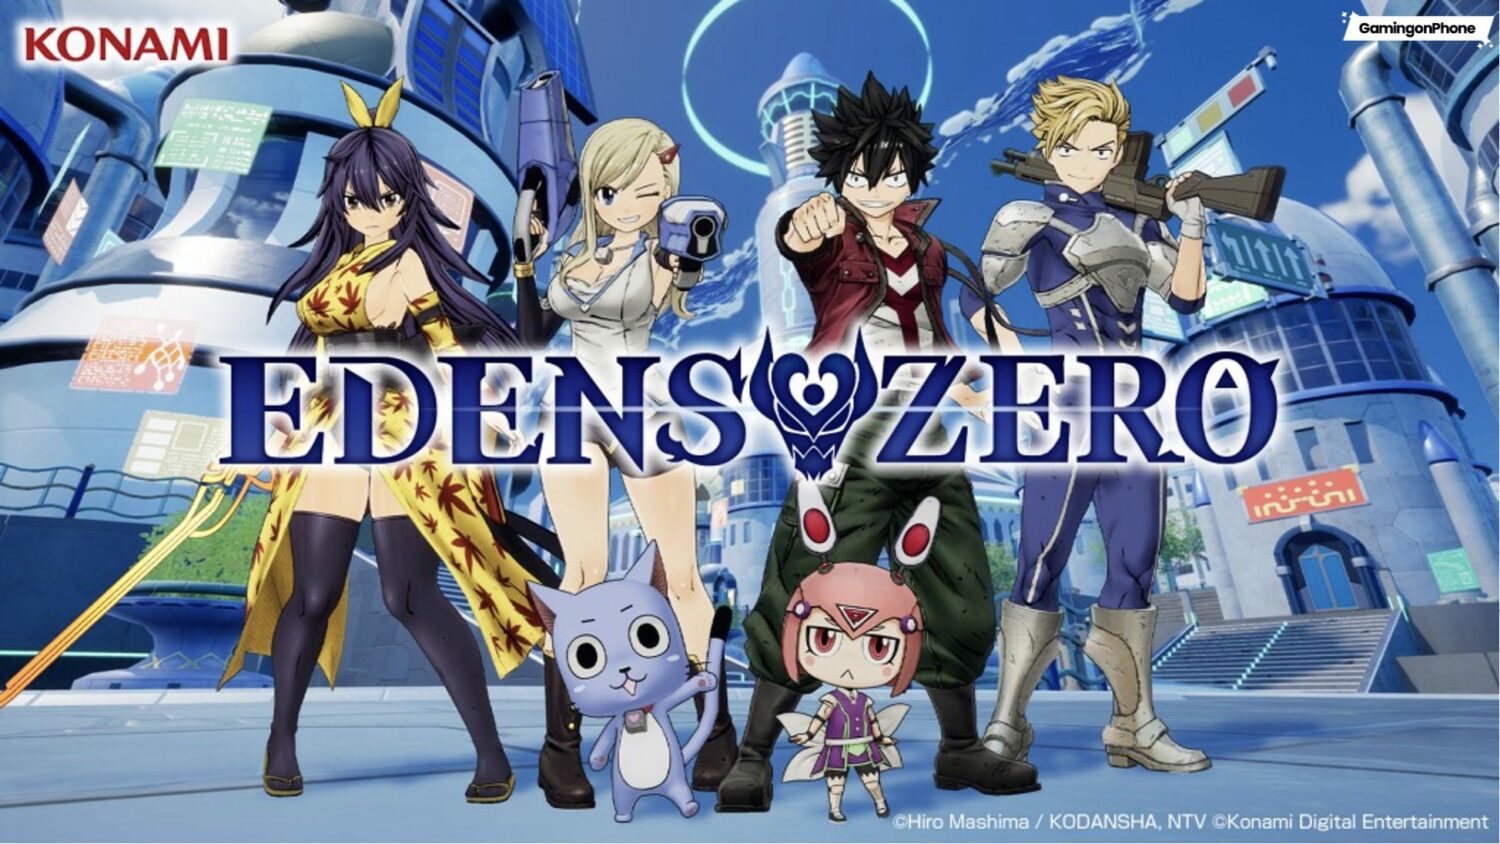 Edens Zero manga enters final arc as 2023 begins